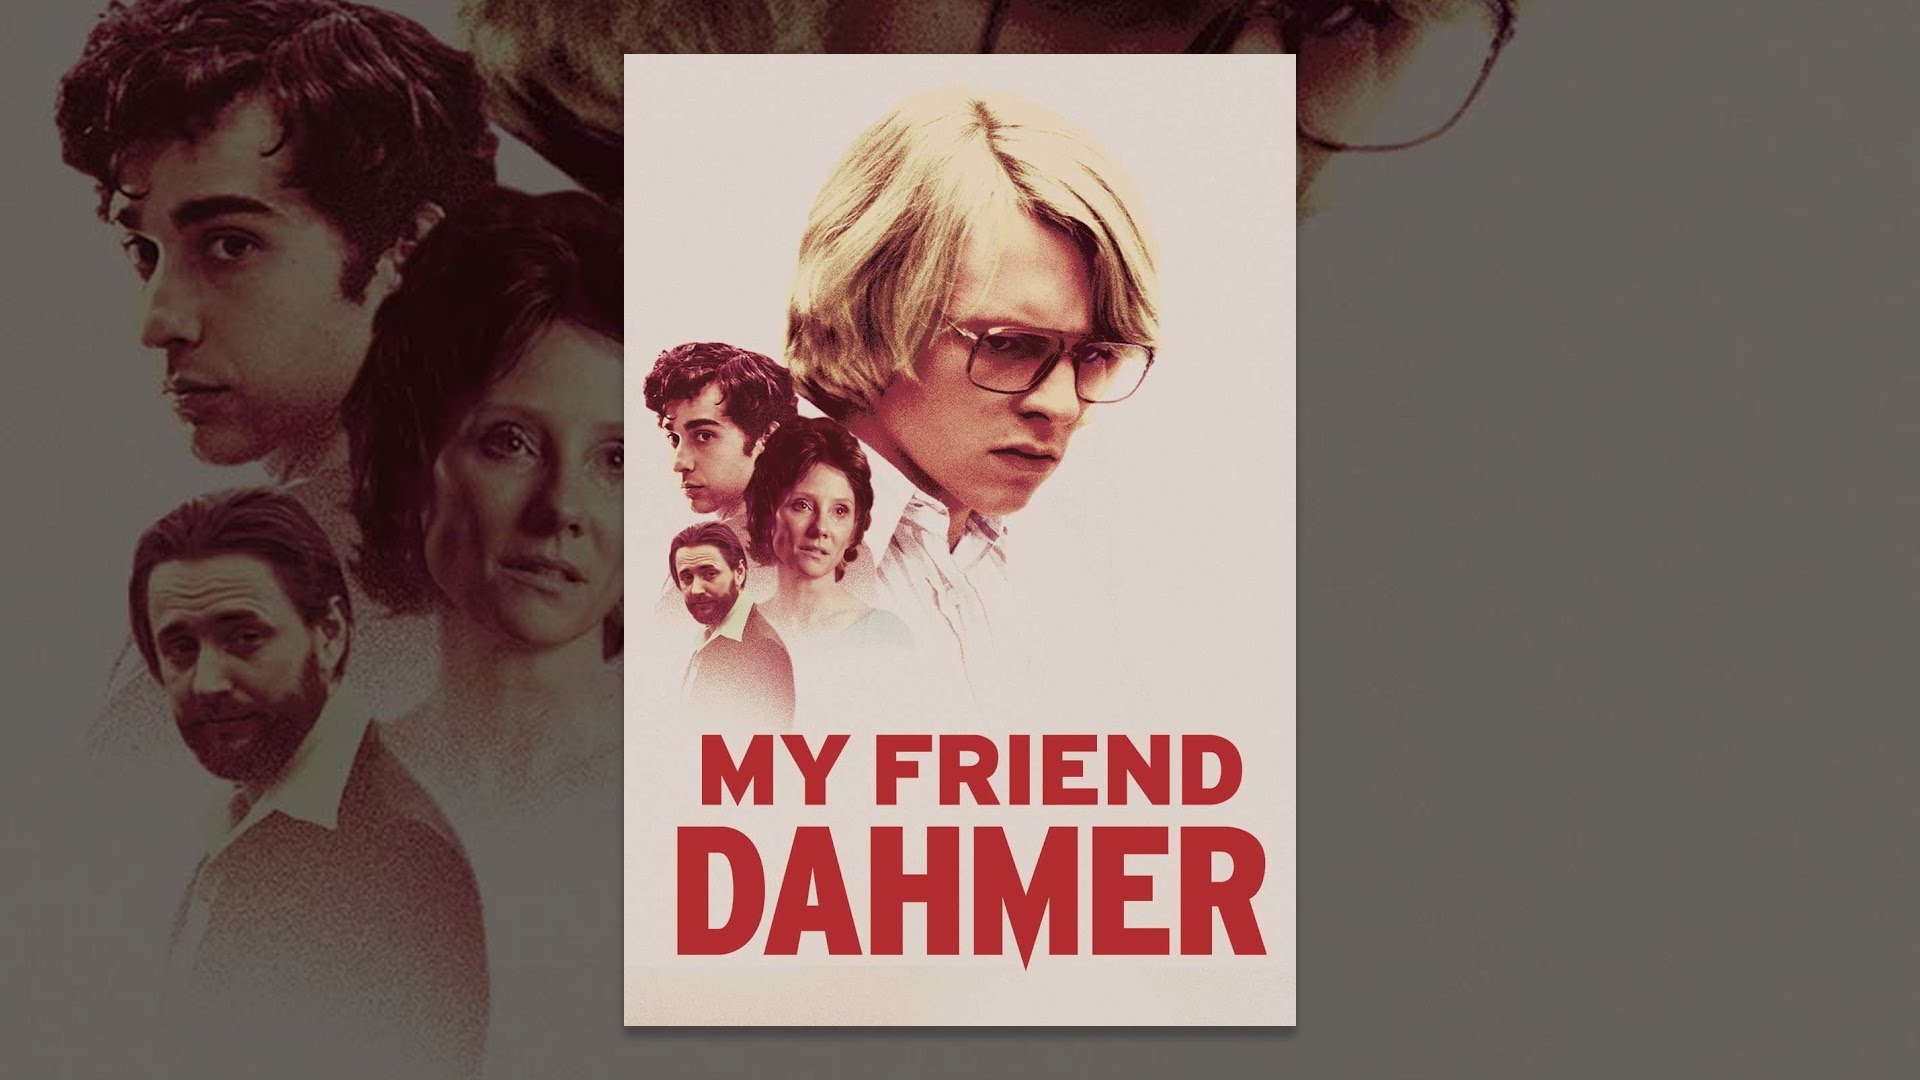 Jeffrey Dahmer Akron Ohio: Serial killer subject of new Netflix series